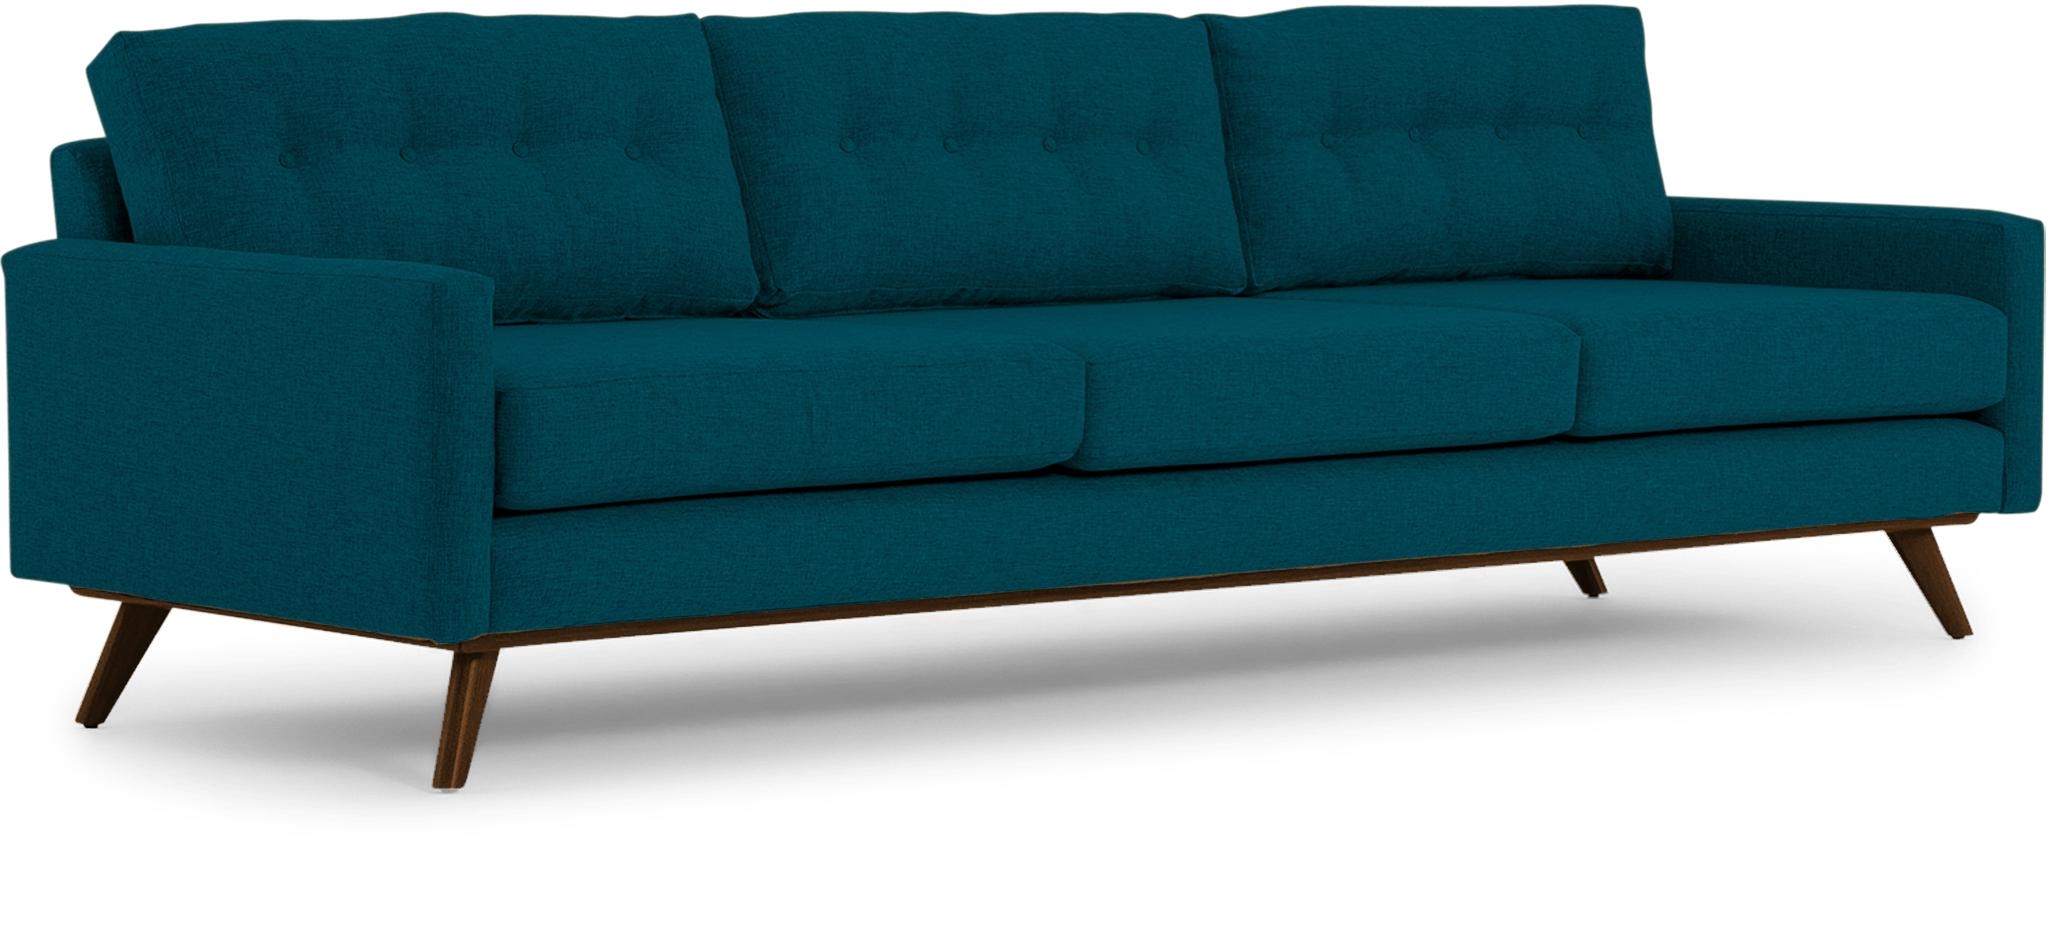 Blue Hopson Mid Century Modern Grand Sofa - Key Largo Zenith Teal - Mocha - Image 1